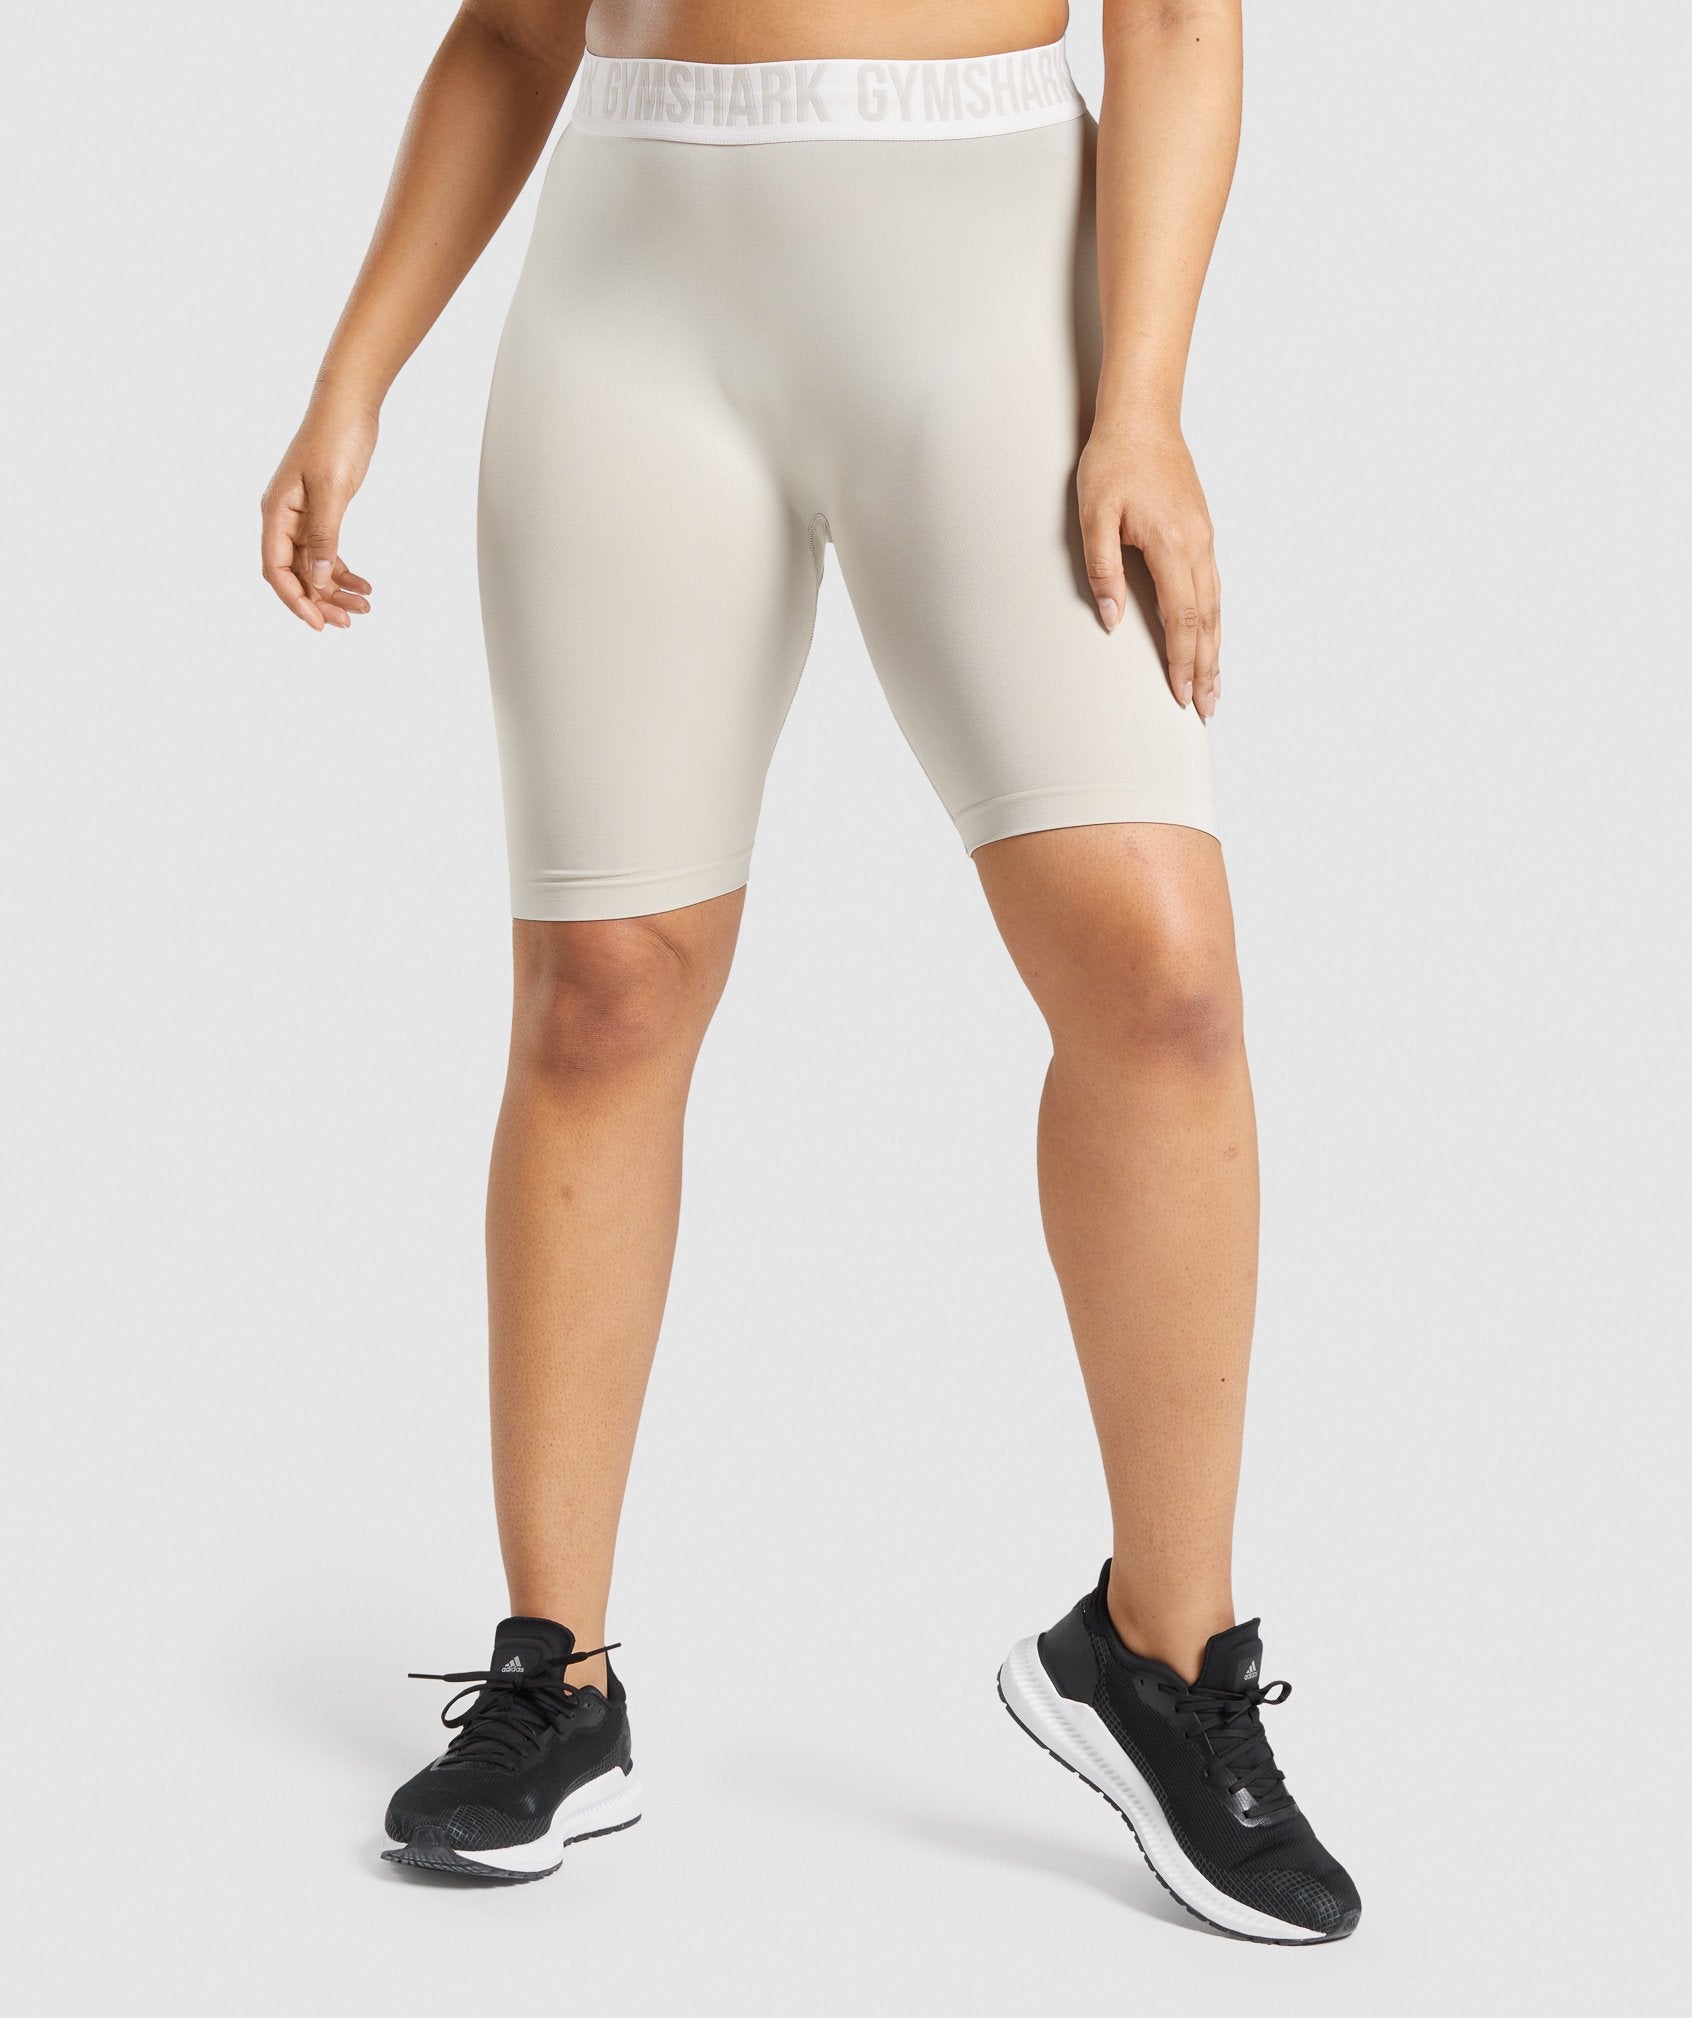 Women's Grey Gym & Workout Shorts - Gymshark